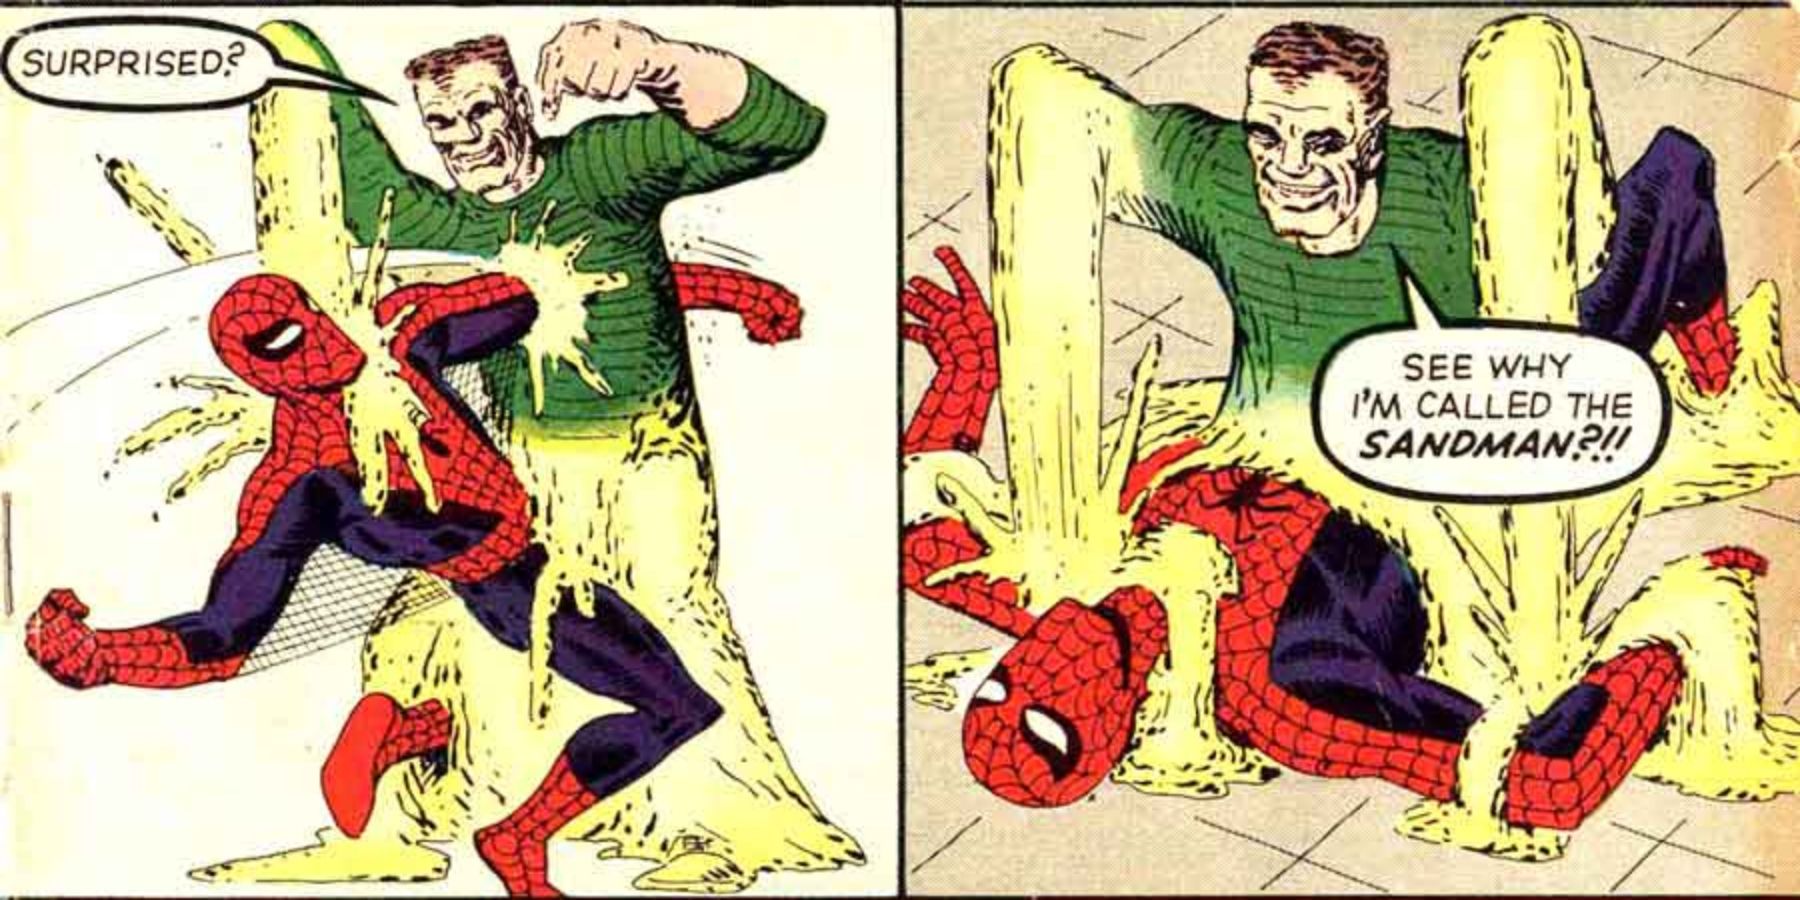 Sandman-Spider-Man-comics